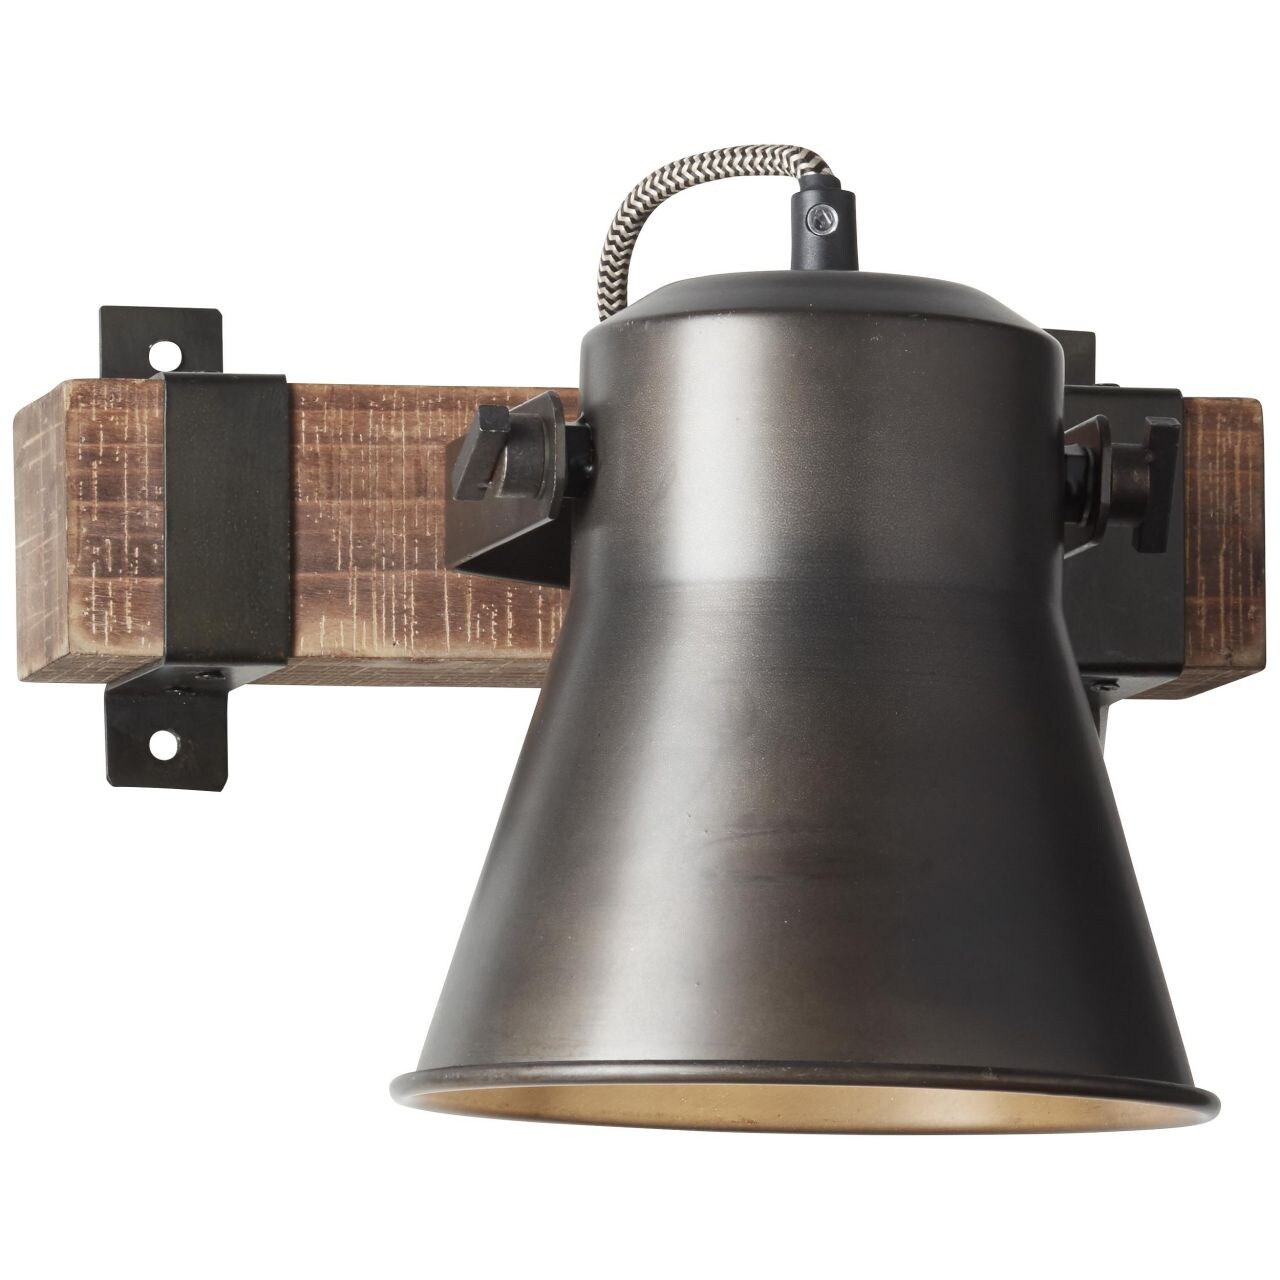 BRILLIANT Lampe, Decca Wandspot schwarz stahl, 1x A60, E27, 10W, Holz aus nachhaltiger Waldwirtschaft (FSC)